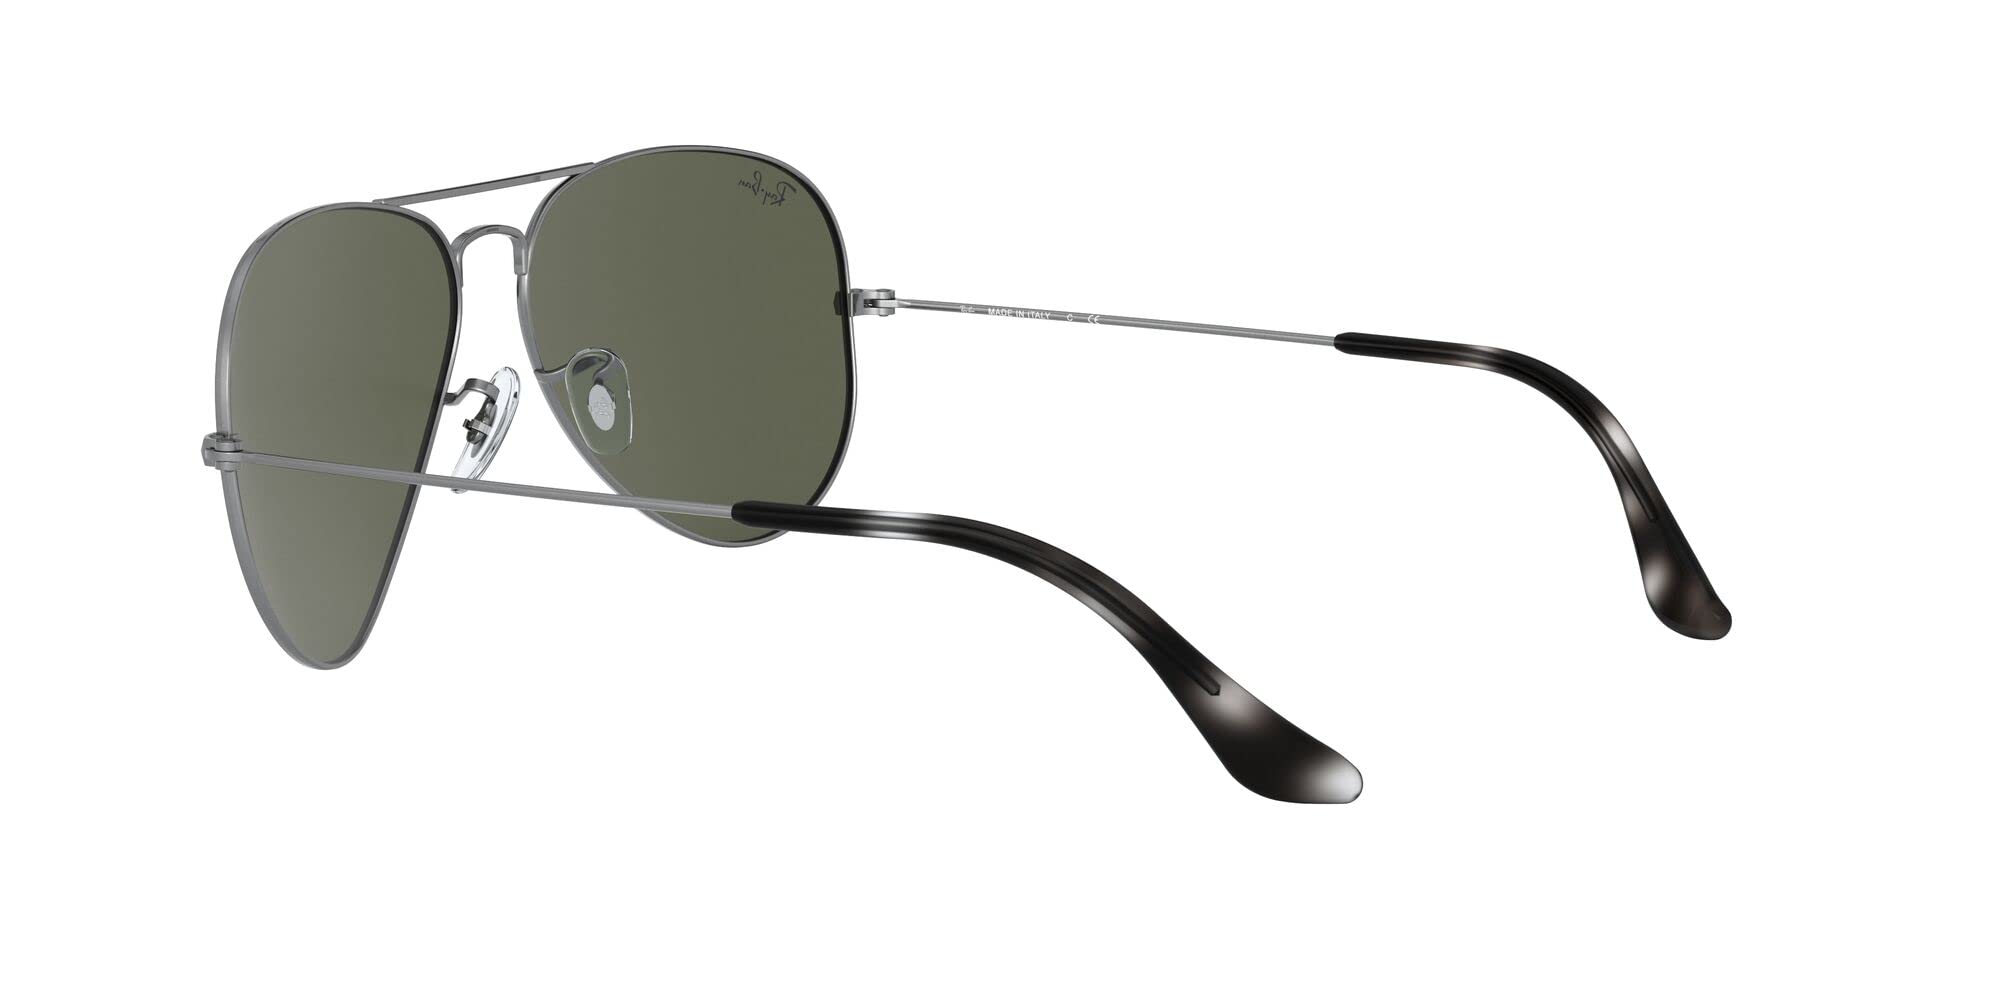 Ray-Ban RB3025 Classic Aviator Sunglasses